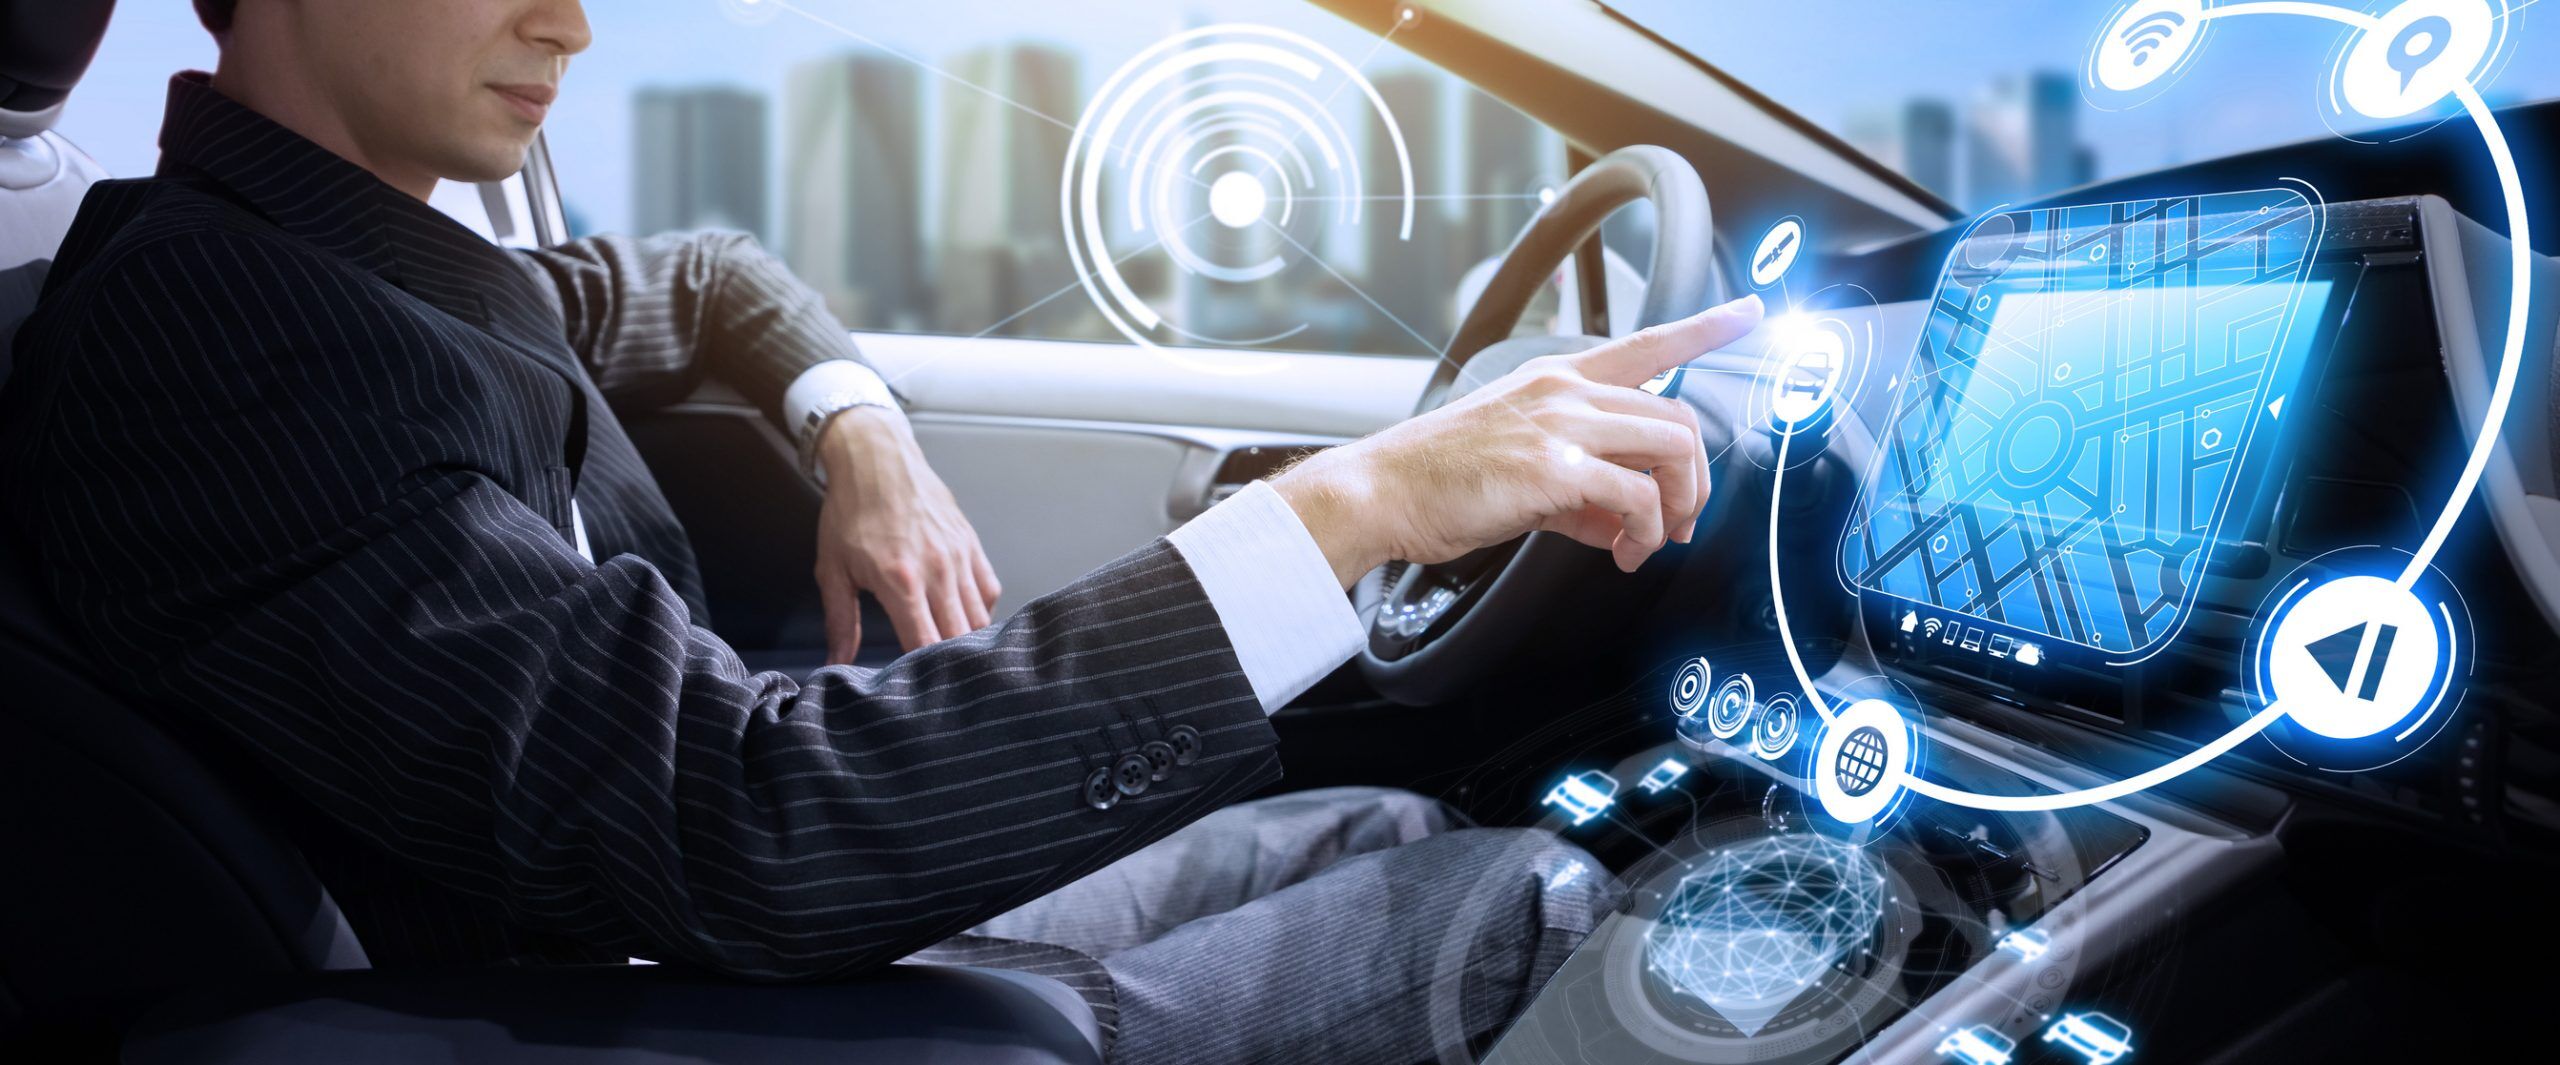 Transformation through Sensor Innovation Drives the Automotive Market